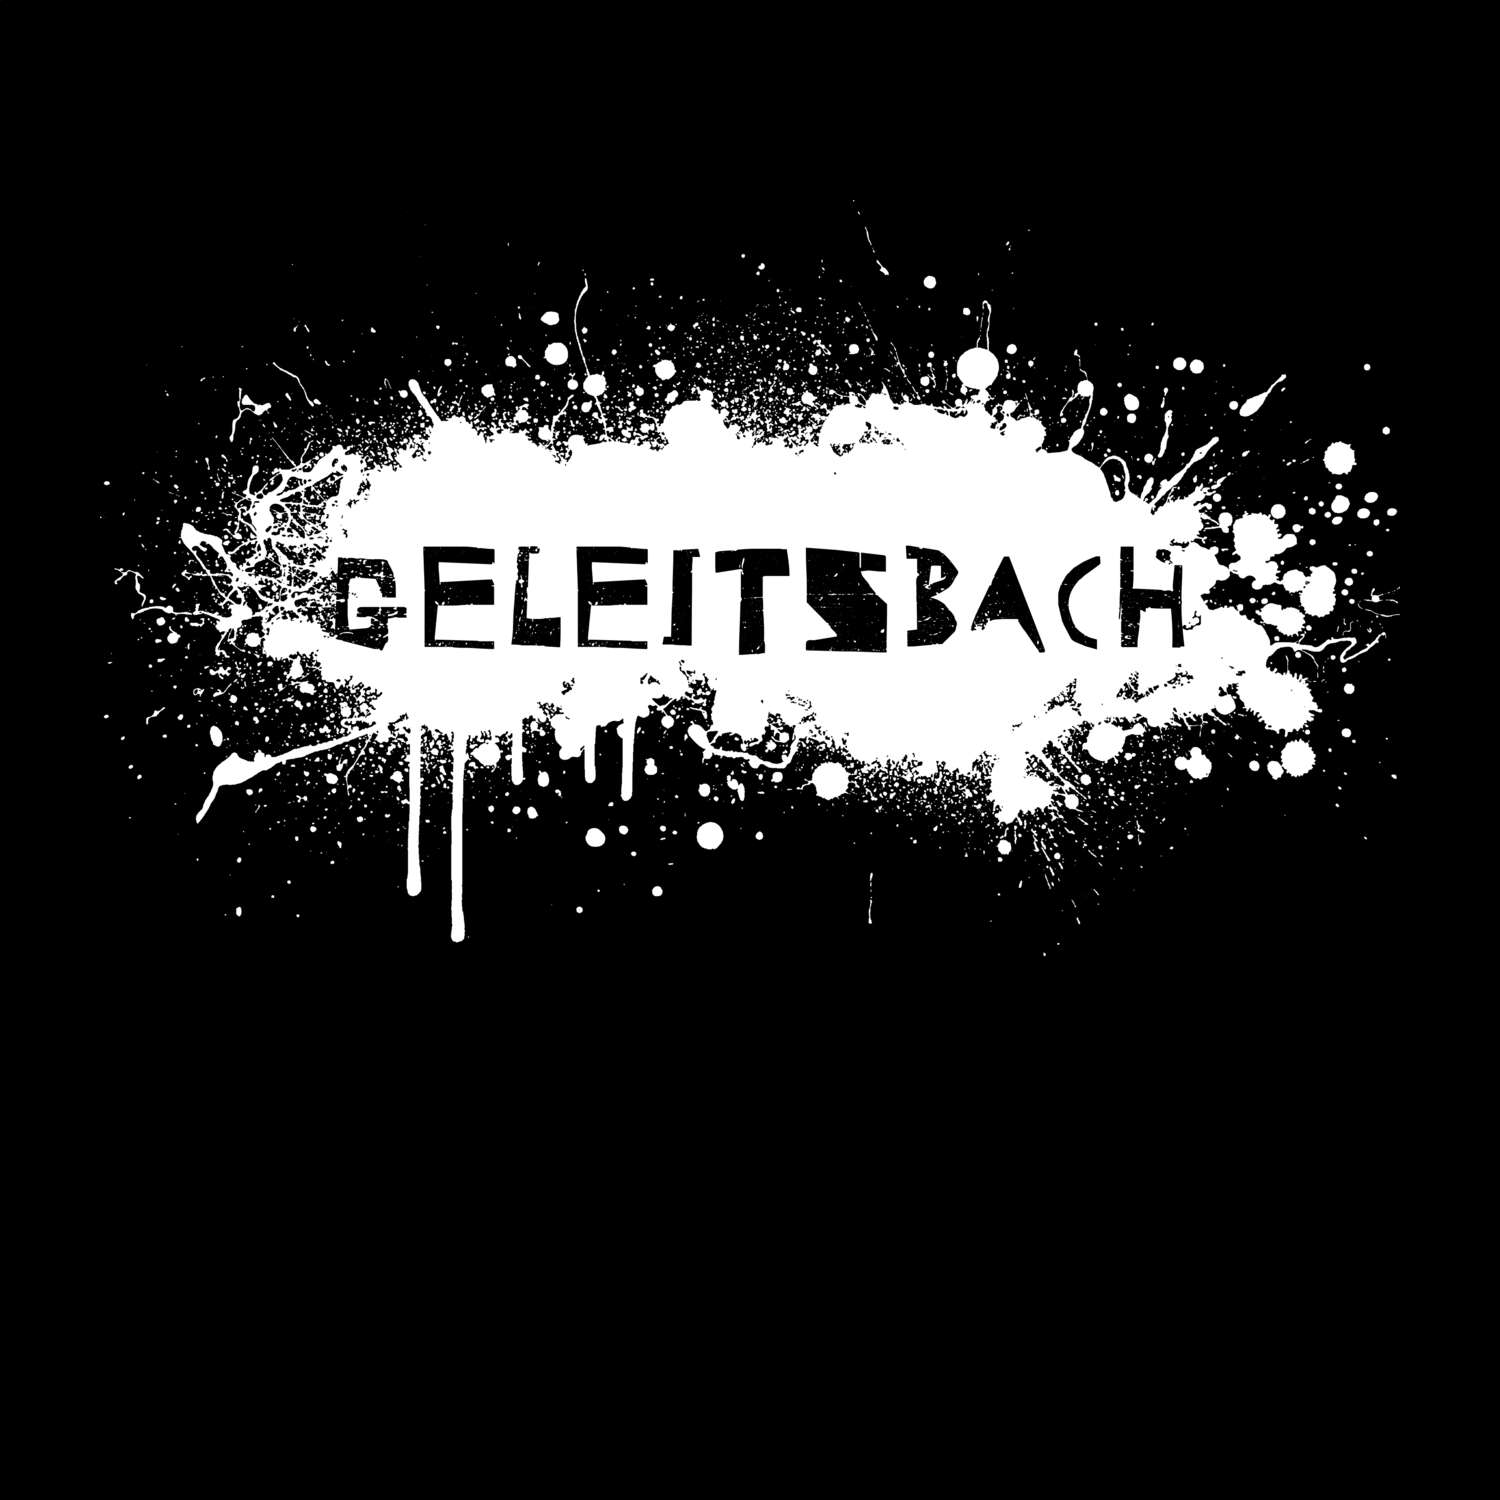 Geleitsbach T-Shirt »Paint Splash Punk«